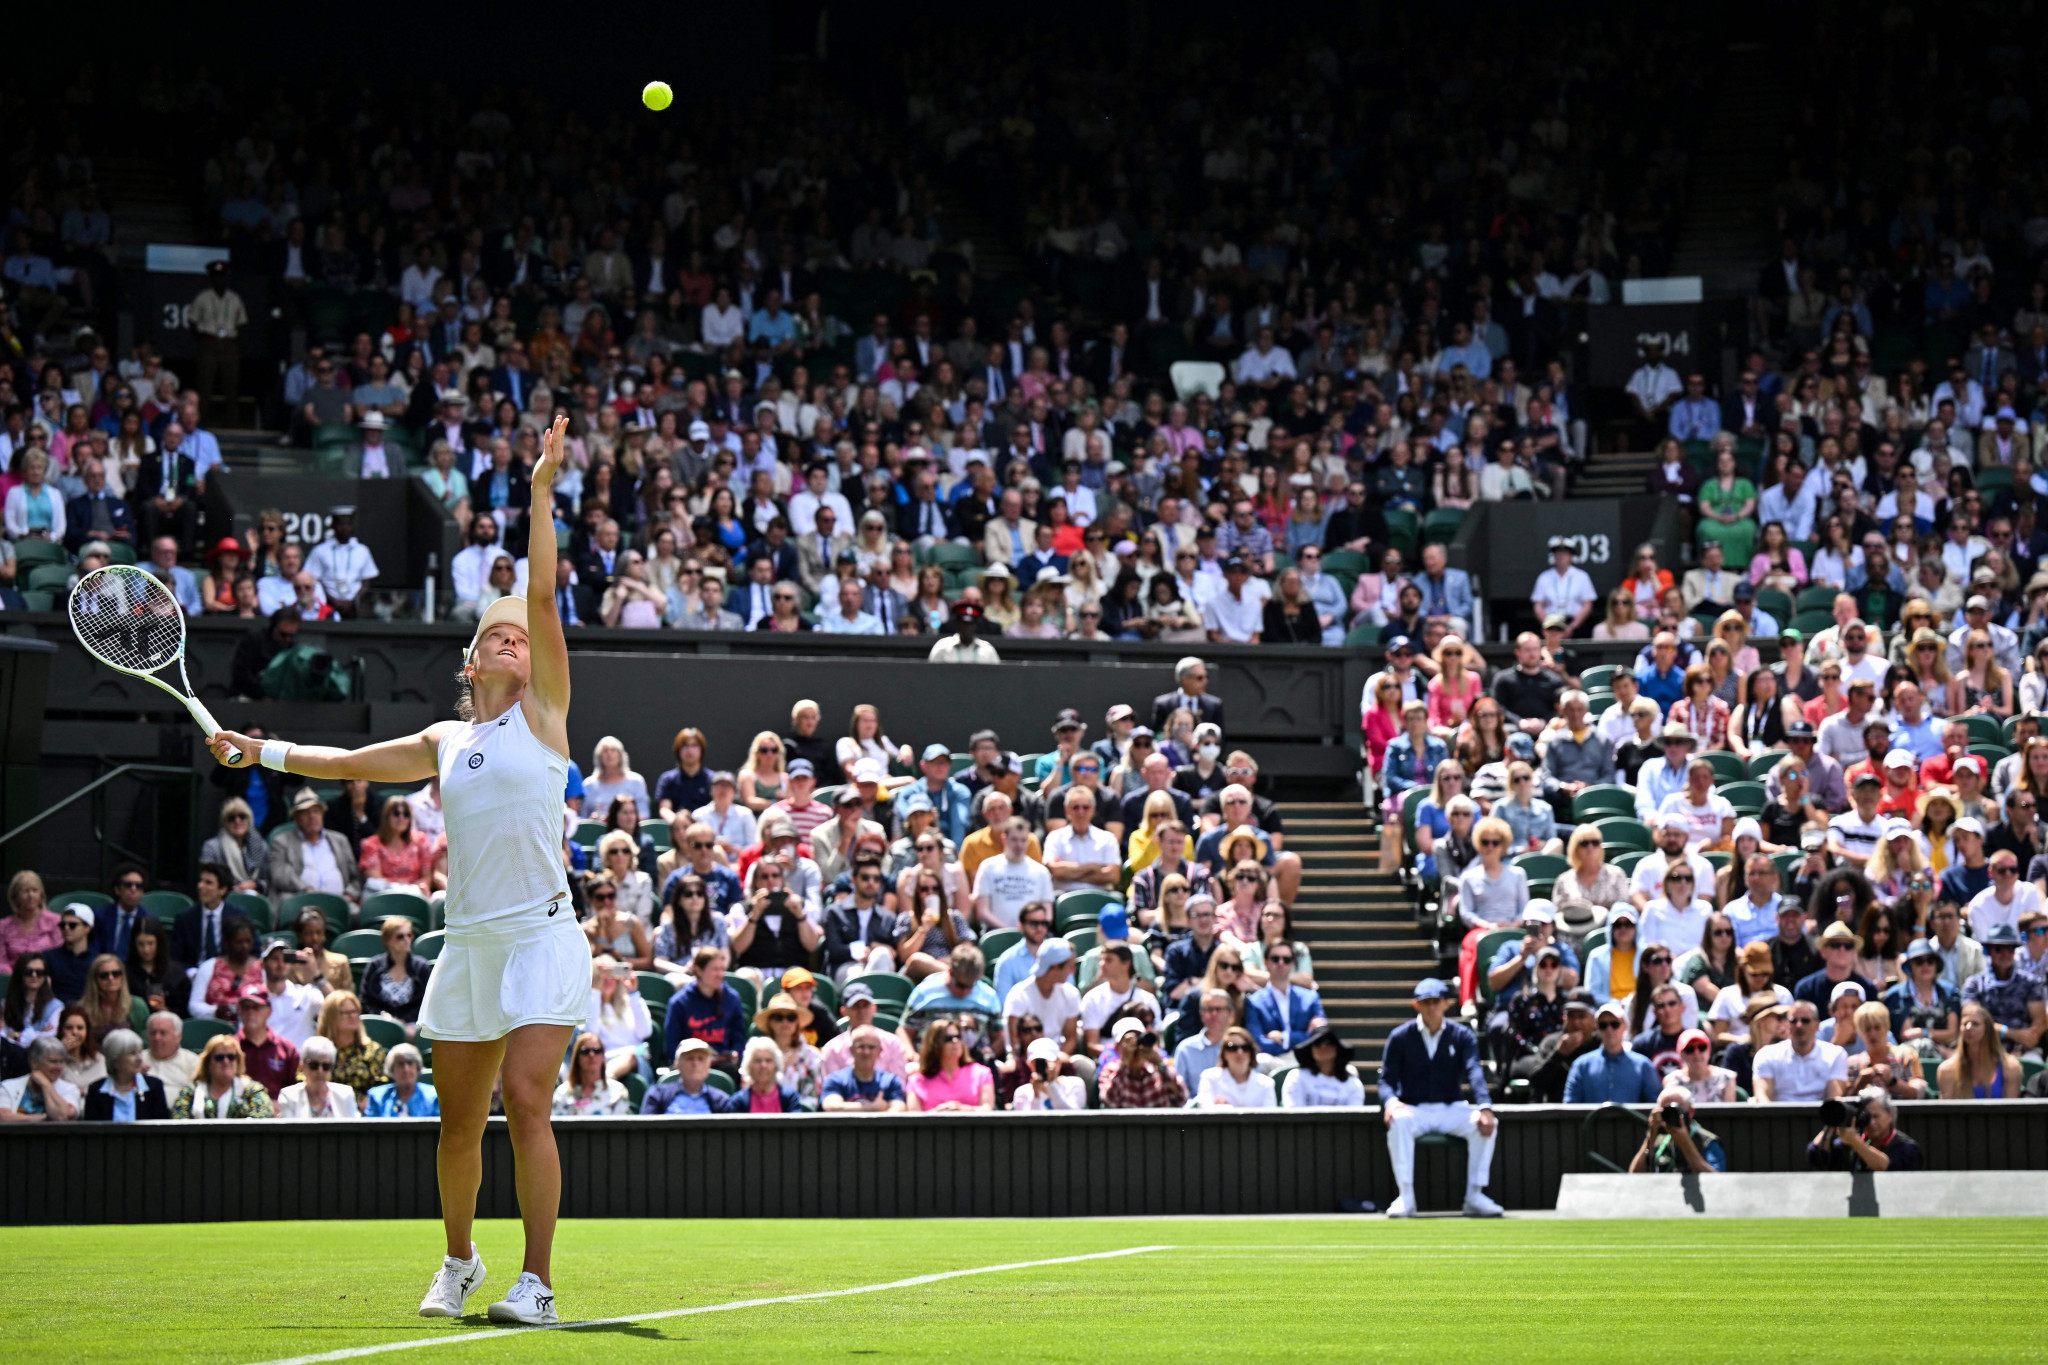 Świątek winning streak up to 36 matches thanks to first-round victory at Wimbledon